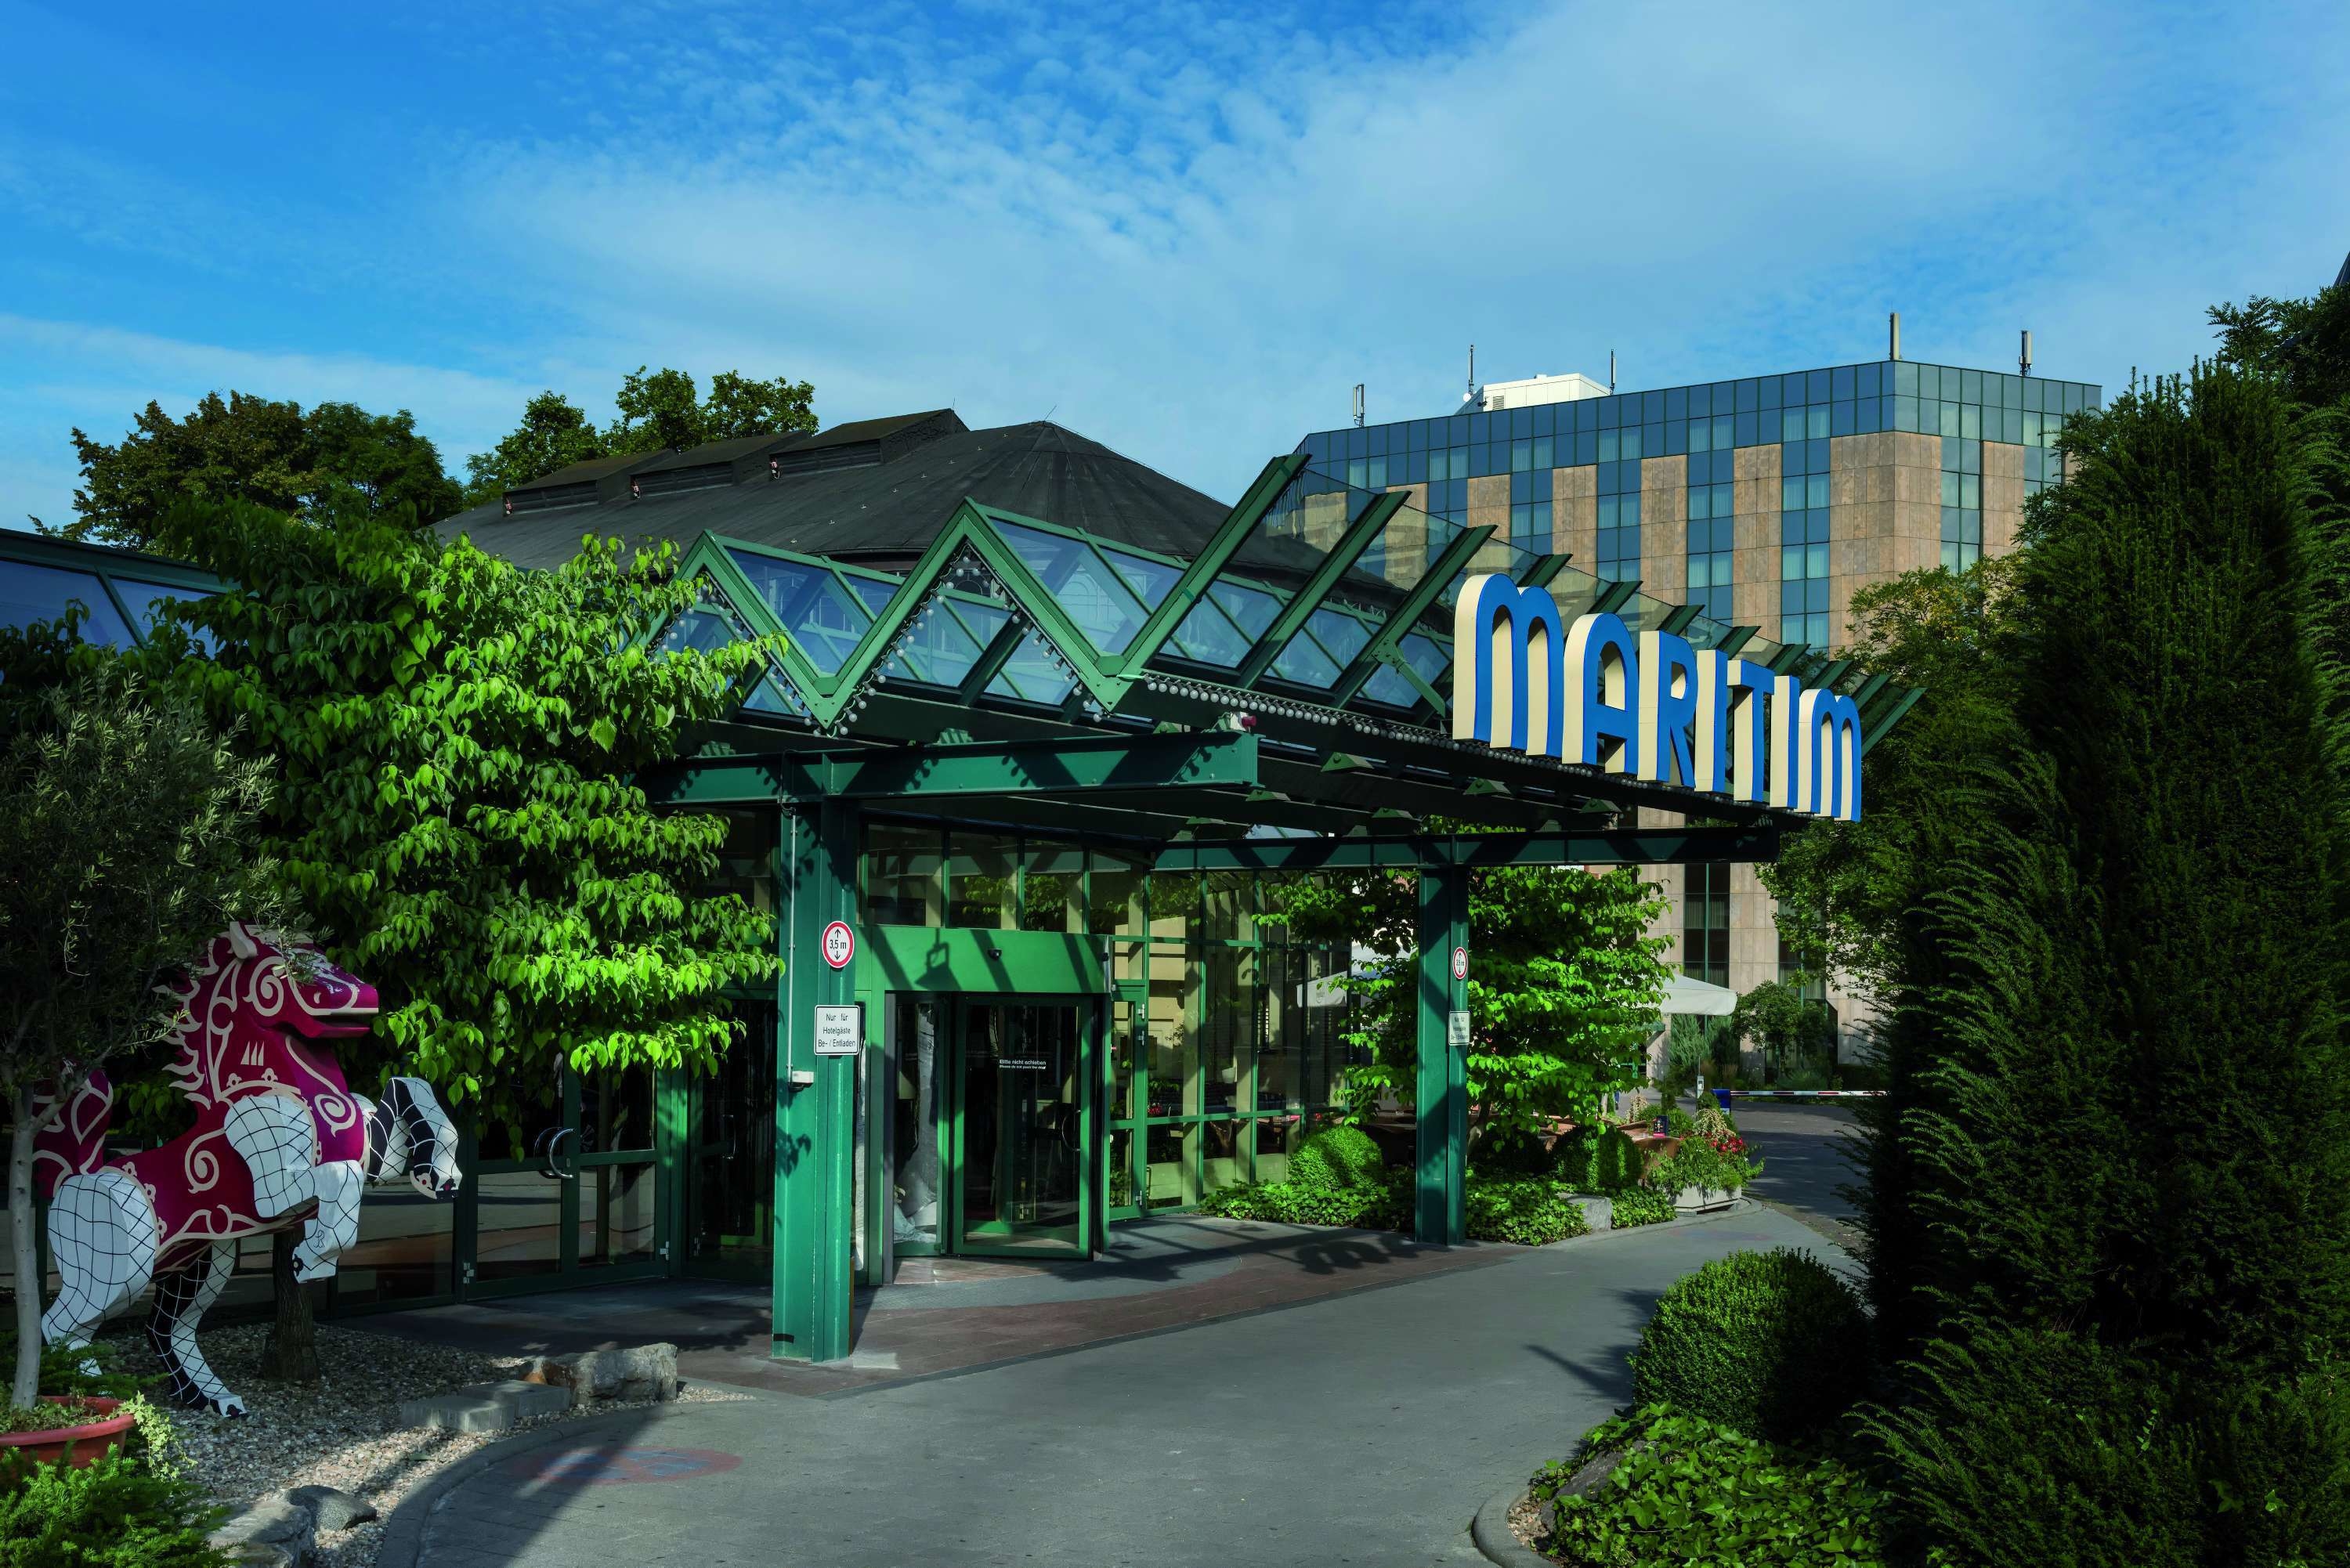 Bilder Maritim Hotel Stuttgart